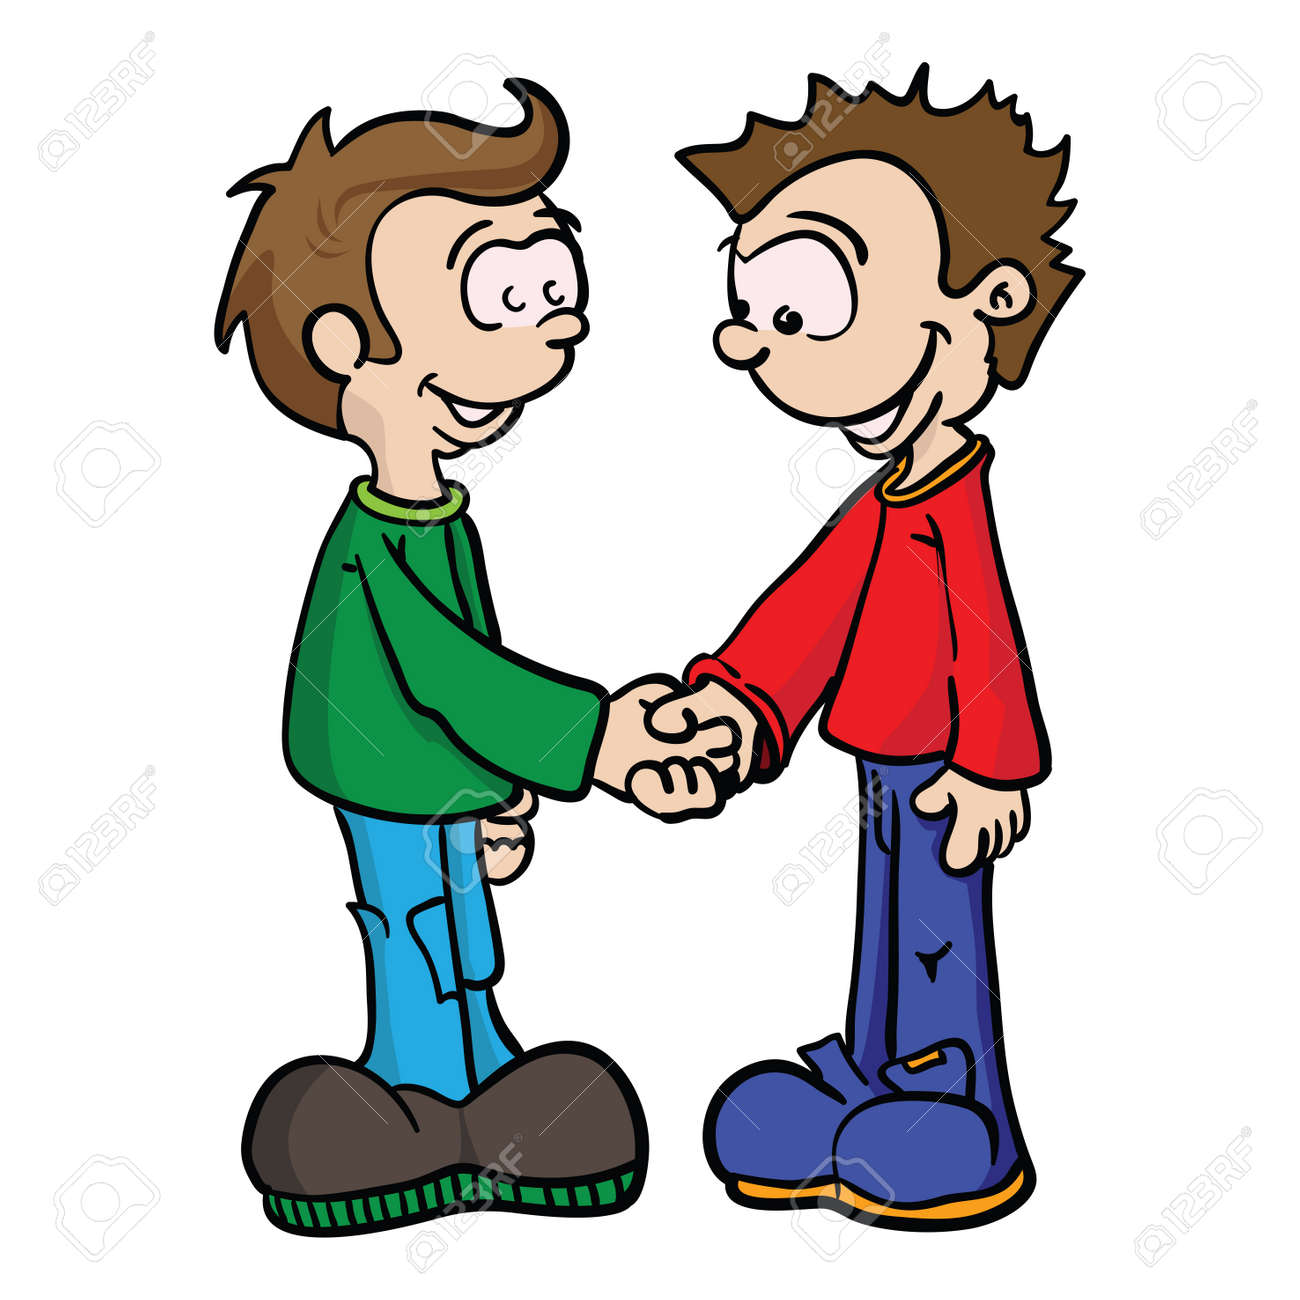 55349575-cartoon-illustration-of-two-boys-shaking-hands.jpg